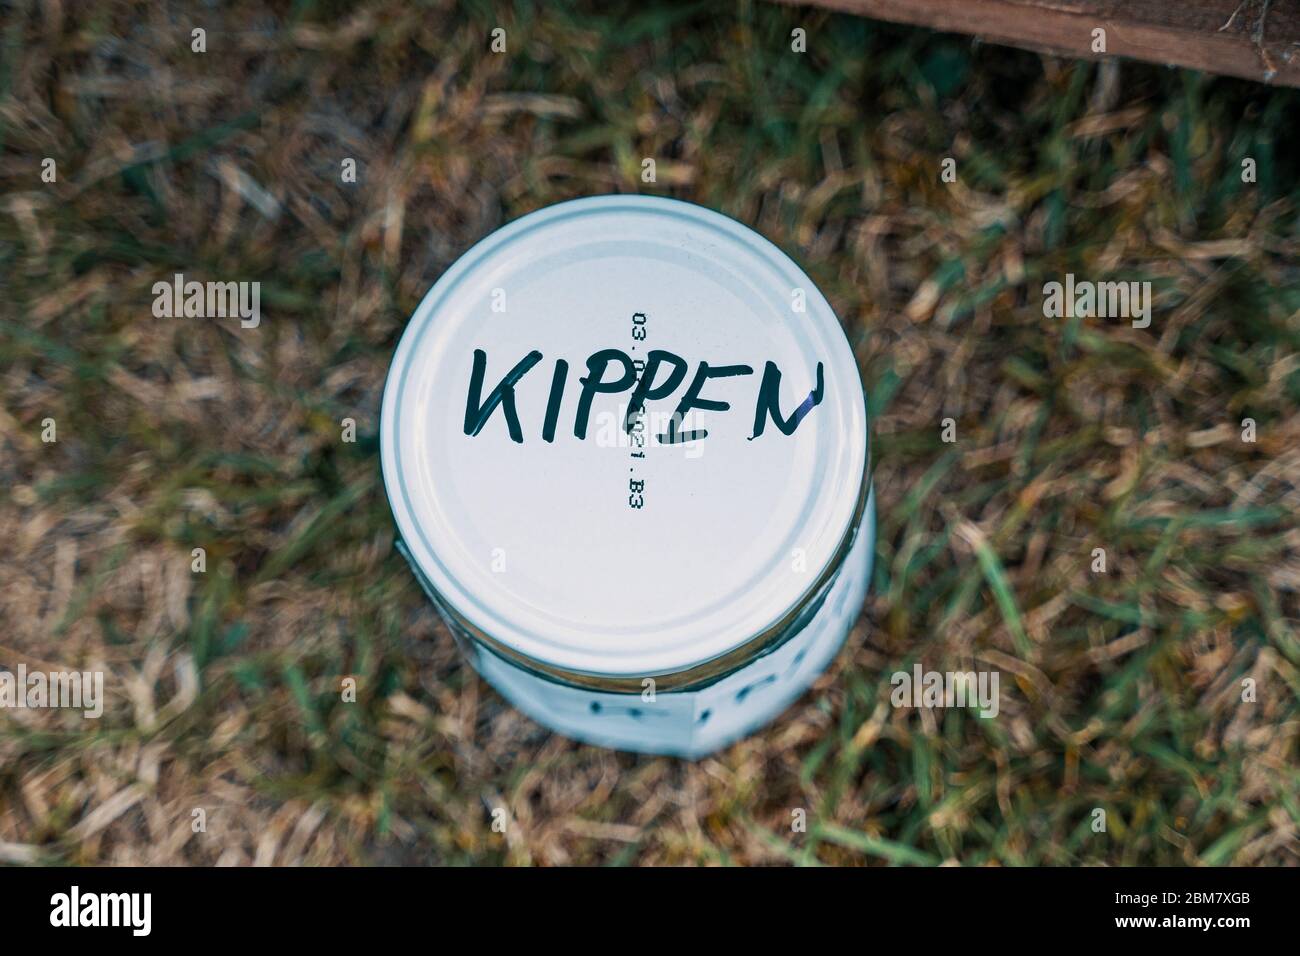 Kippen Ashtray Stock Photo